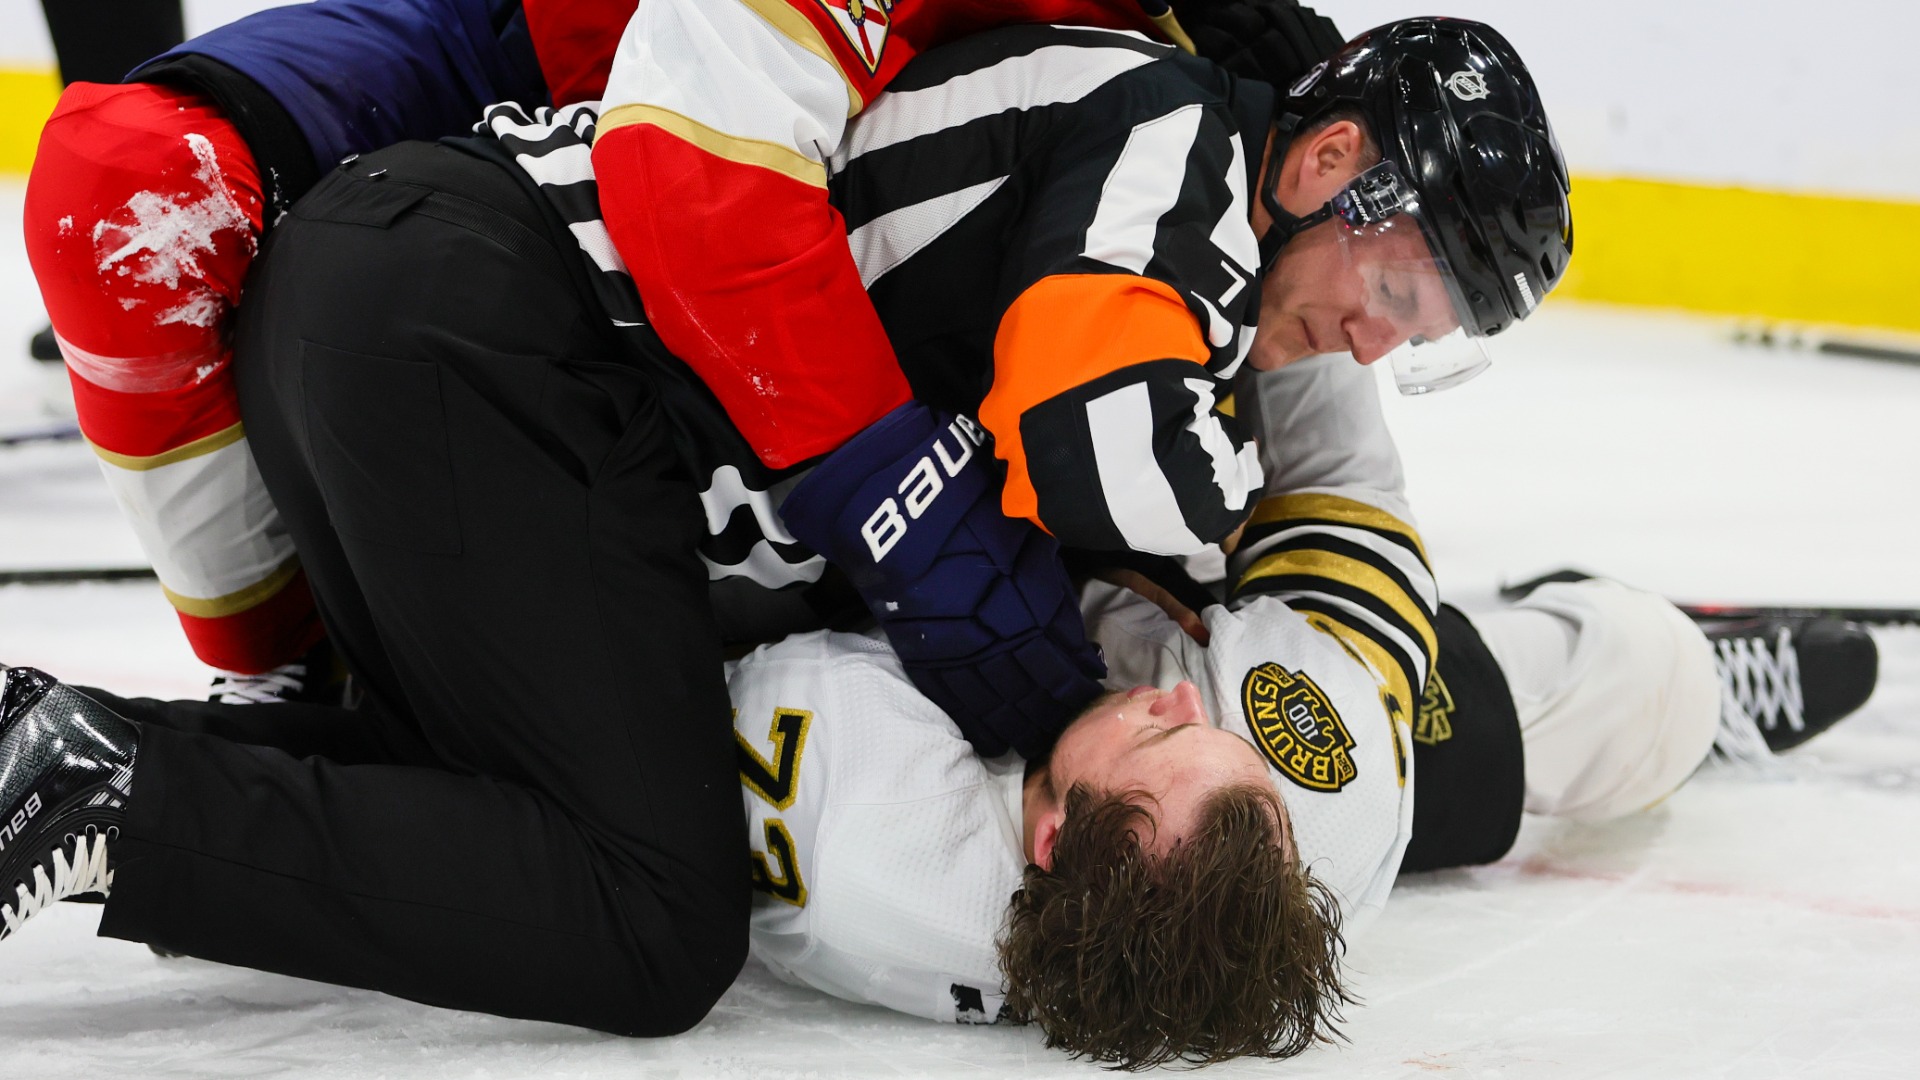 Ex-Bruins Coach Believes NHL Playoff Officiating ‘Worst’ In
Decades